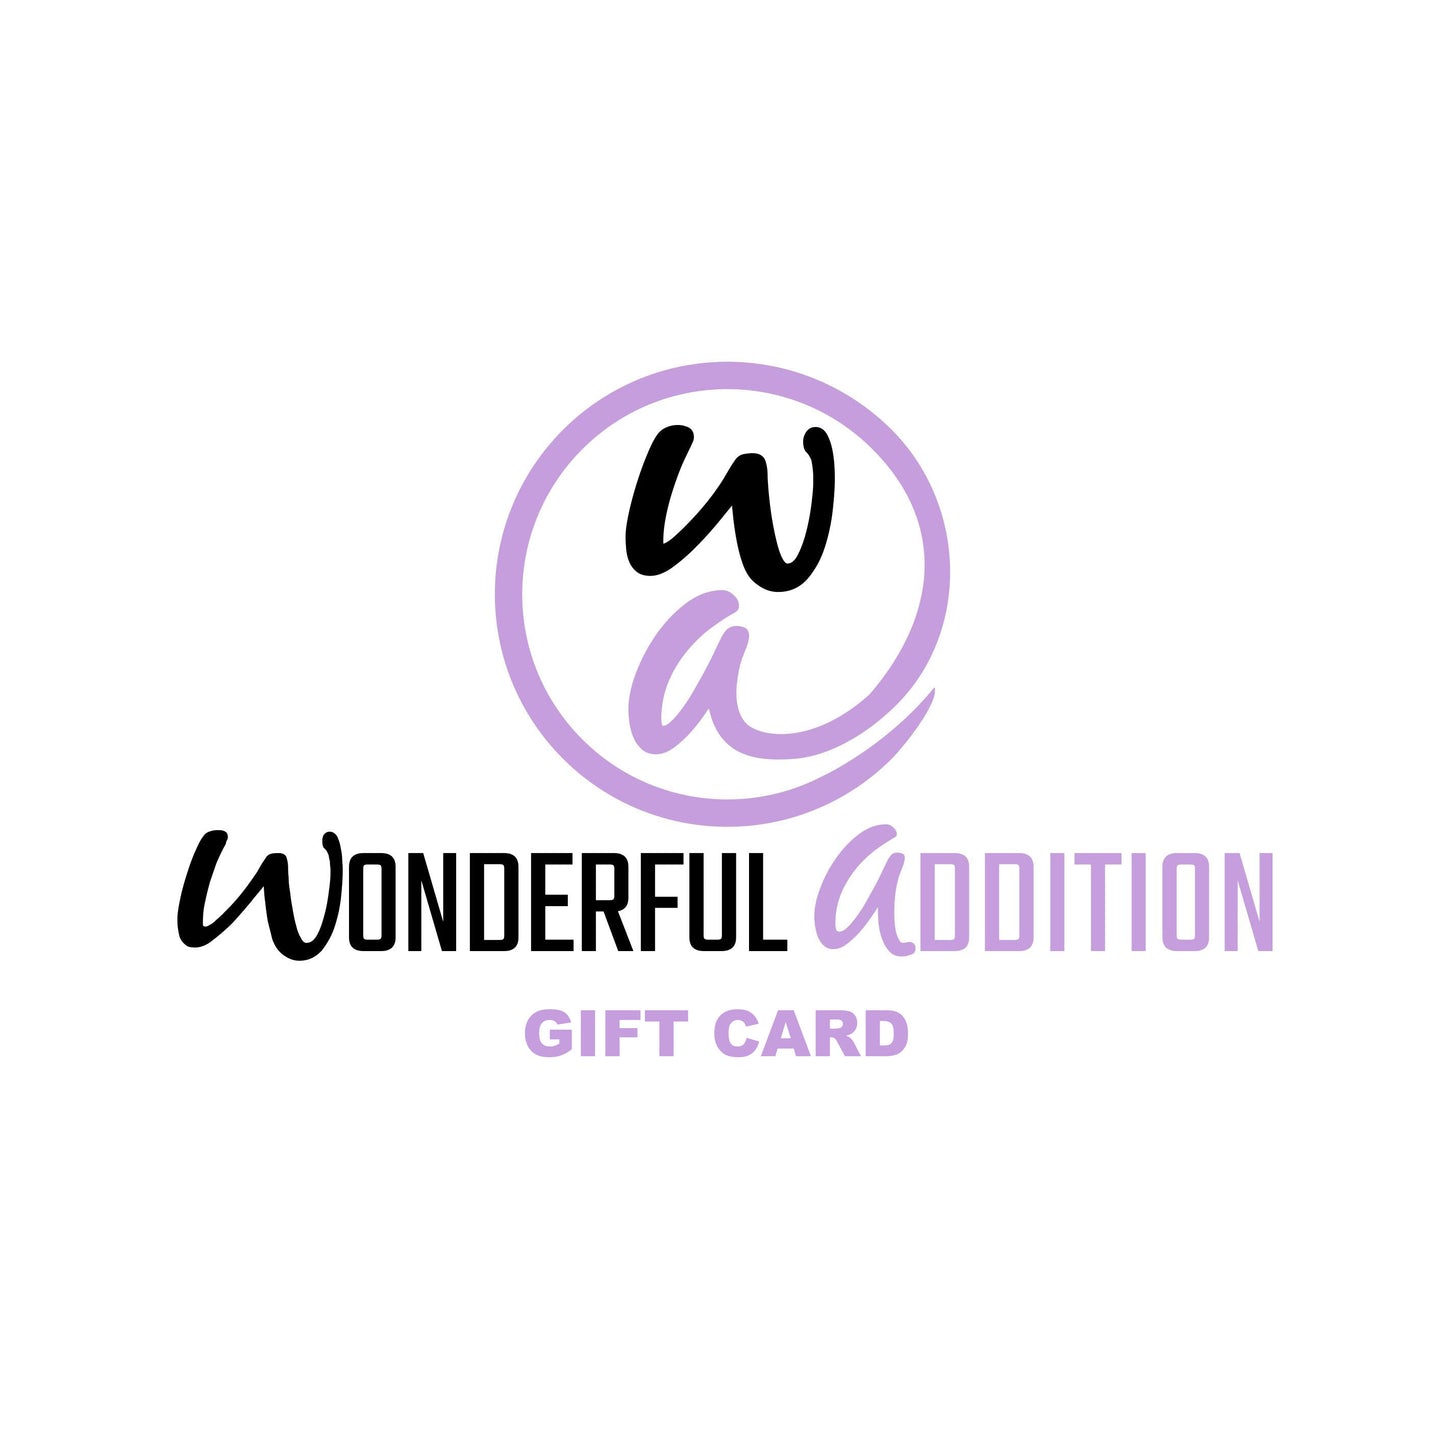 Gift Cards - $25.00 - Wonderful Addition